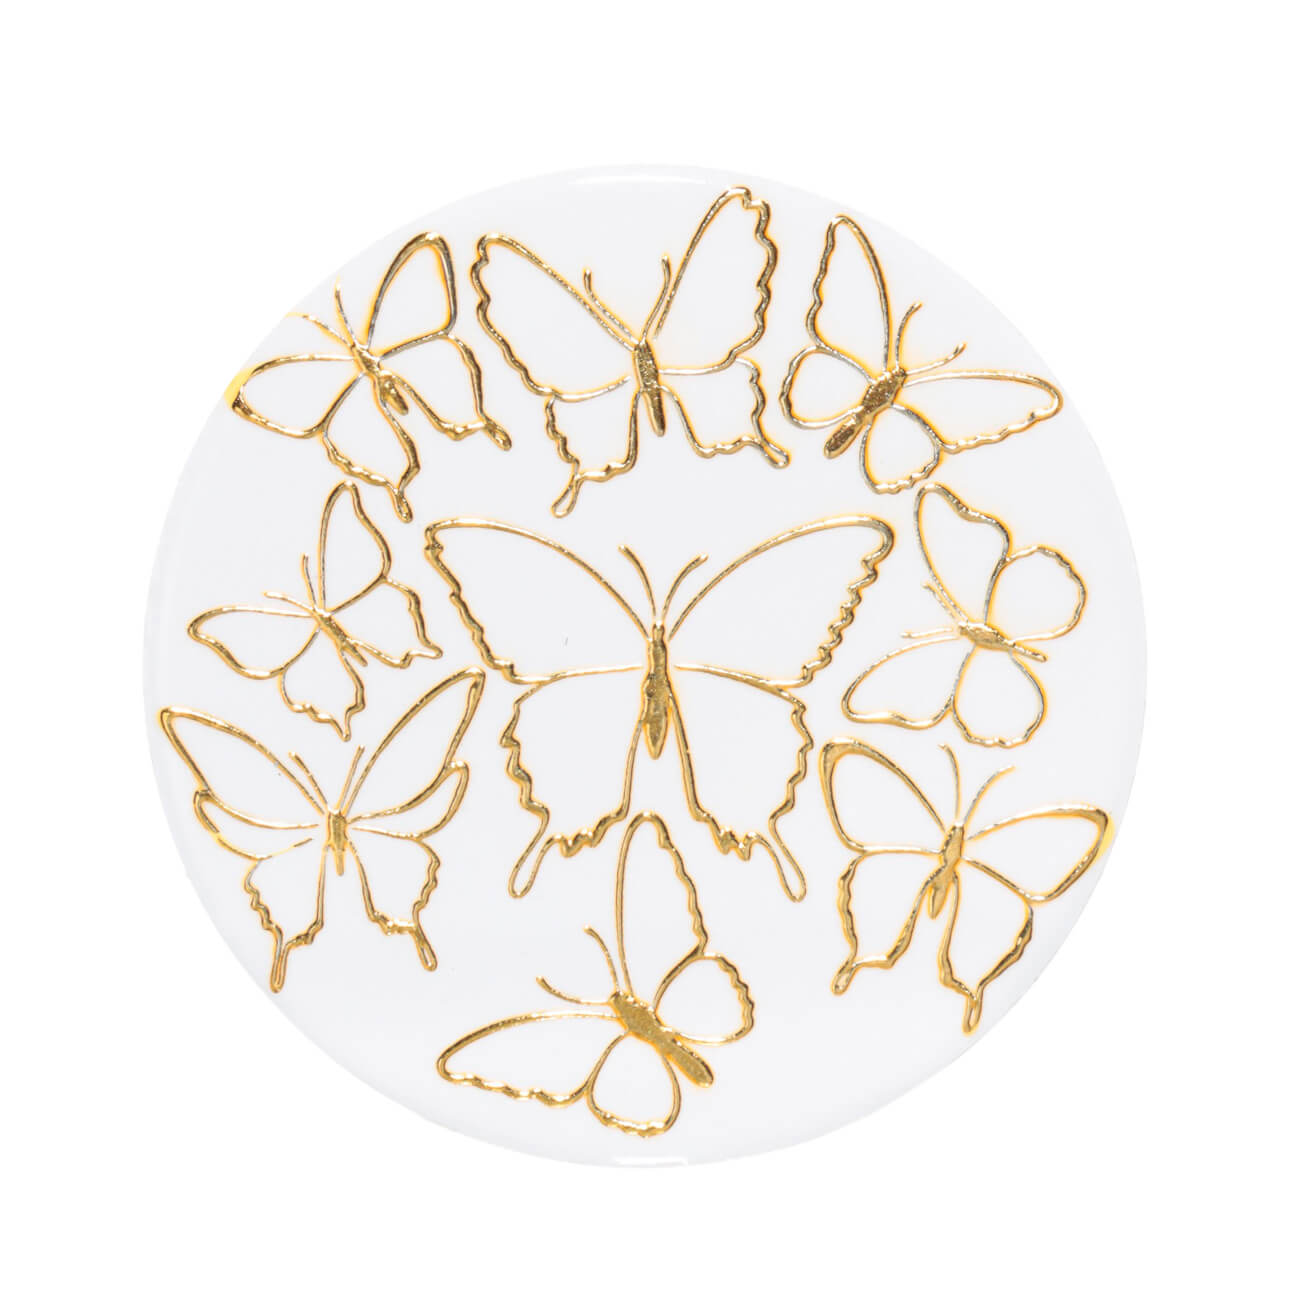 Подставка под кружку, 11 см, керамика/пробка, круглая, белая, Золотистые бабочки, Butterfly подставка под хлеб деревянная 180х150х55мм